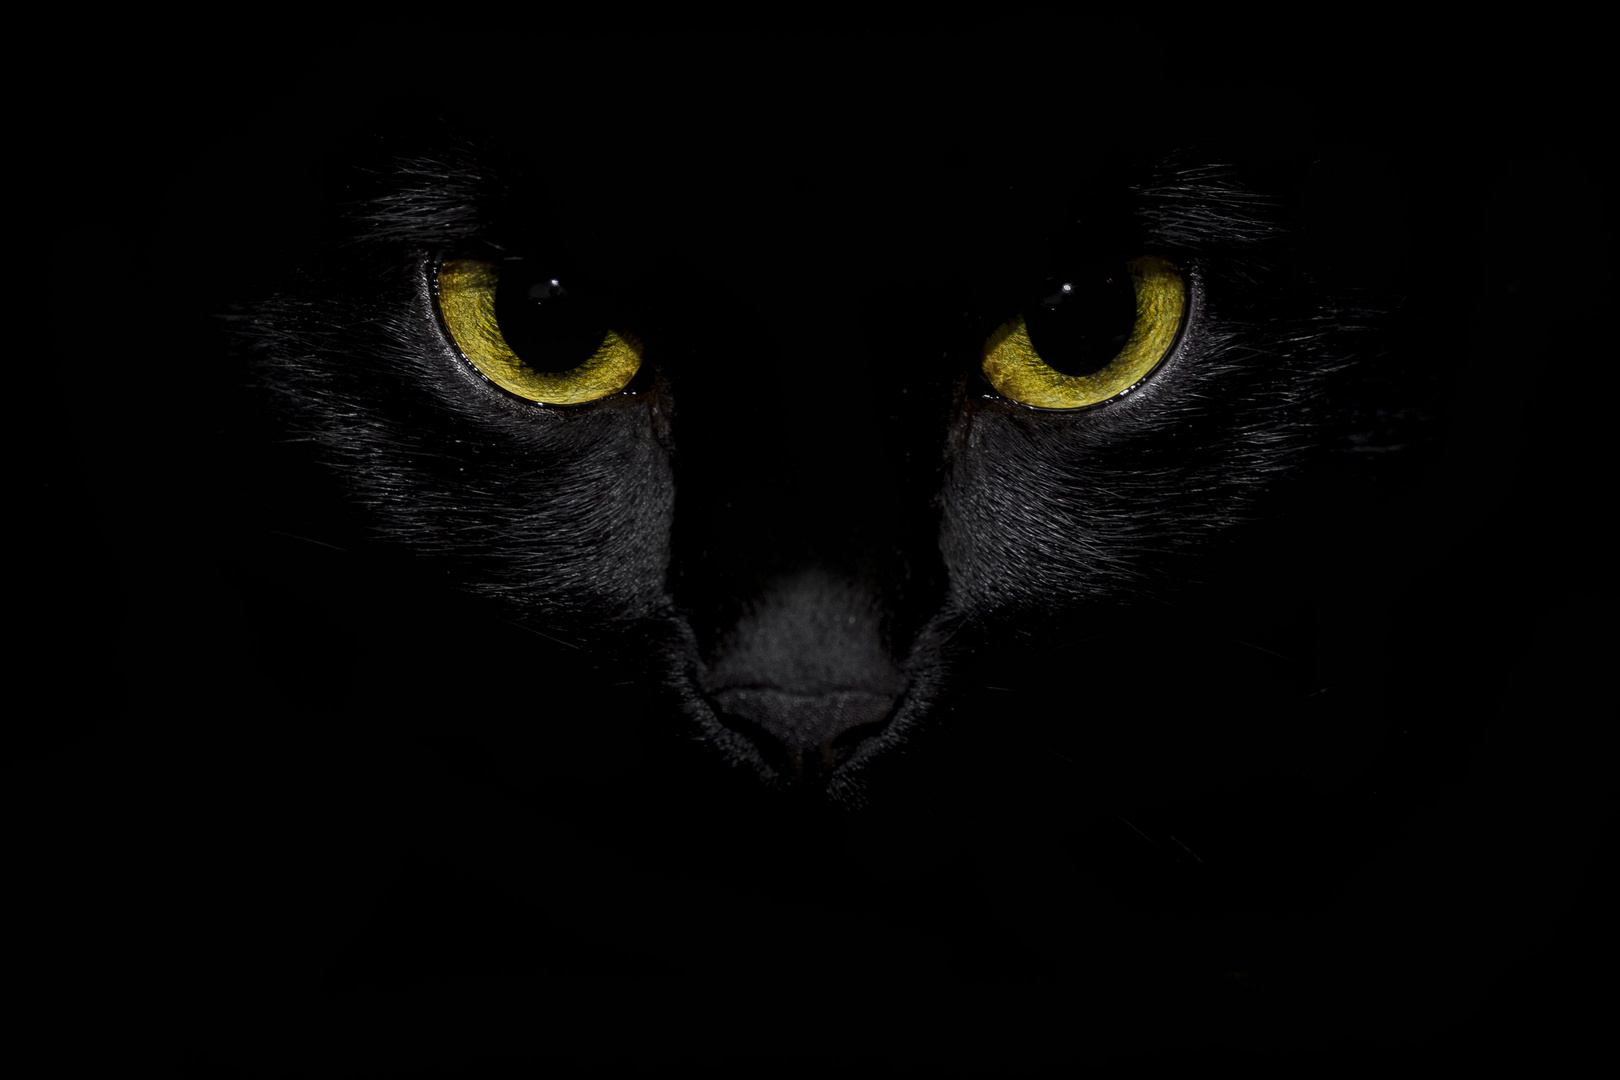 Stare of the Black Cat